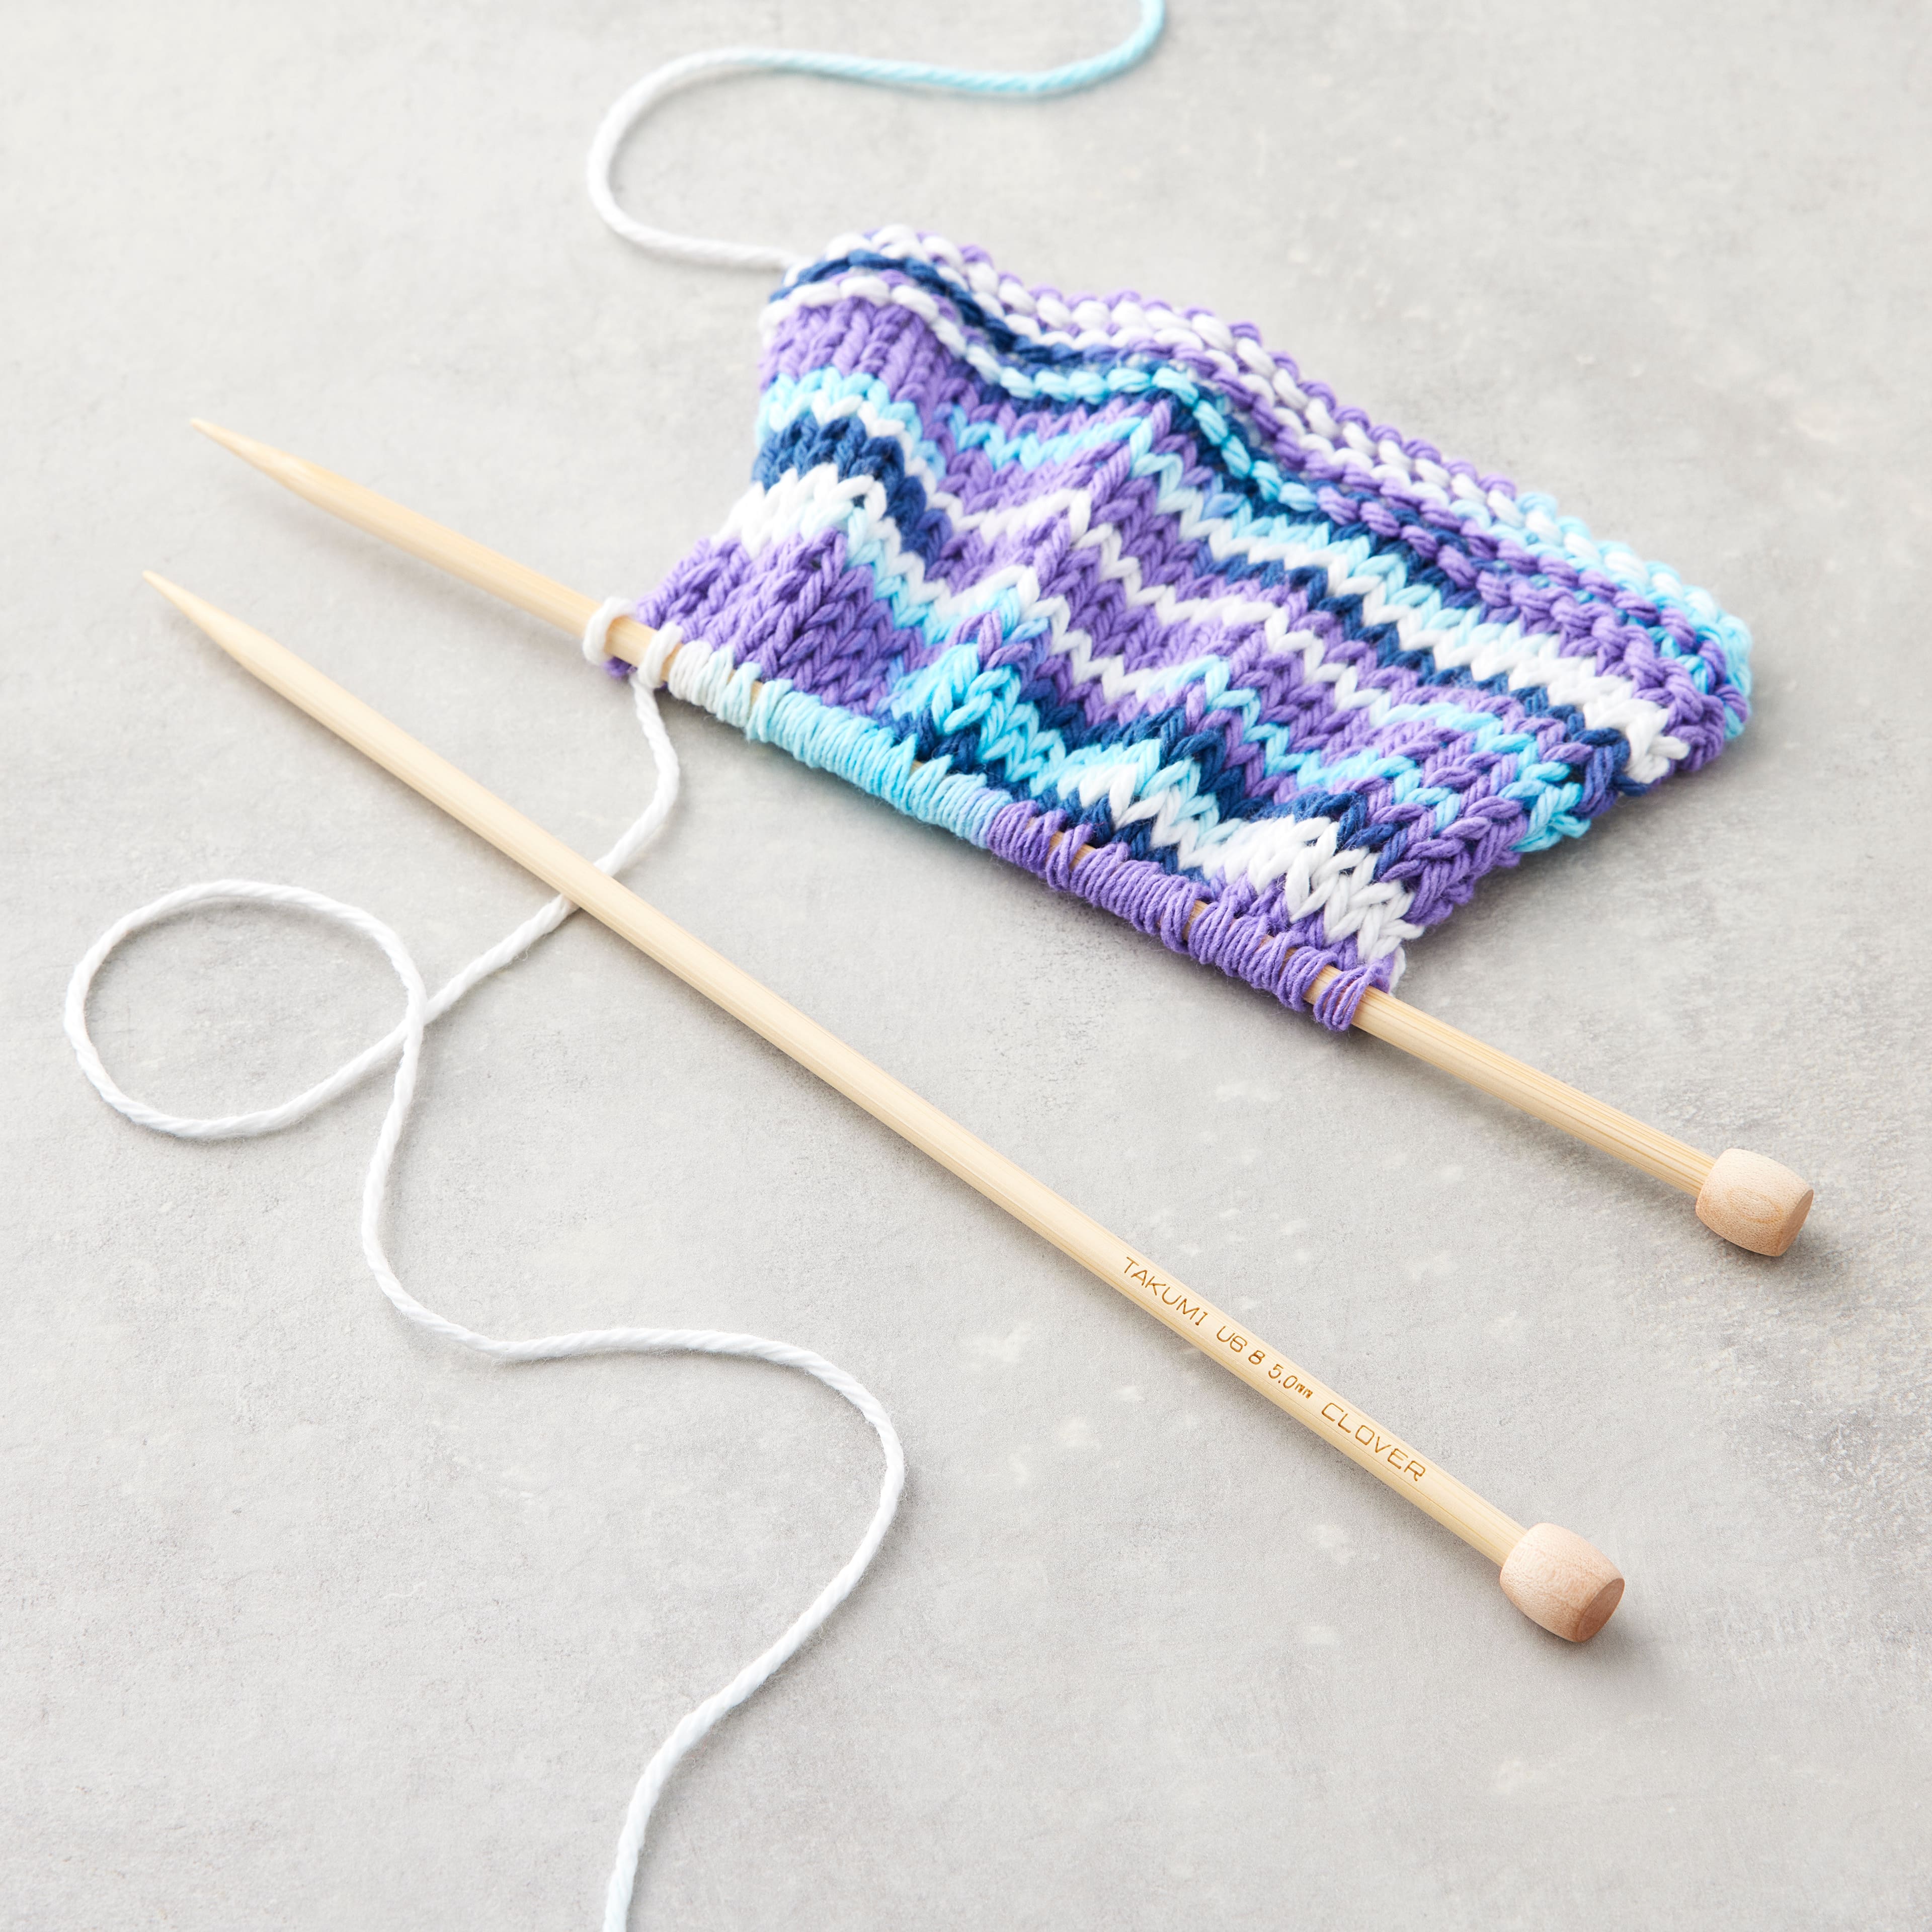 20pcs Loom Knit Hook Set, Crochet Needle Hook Kit, 8pcs Blue Knitting Loom  Hooks With 12pcs Colorful Plastic Sewing Needles For Knitting Looms Knittin